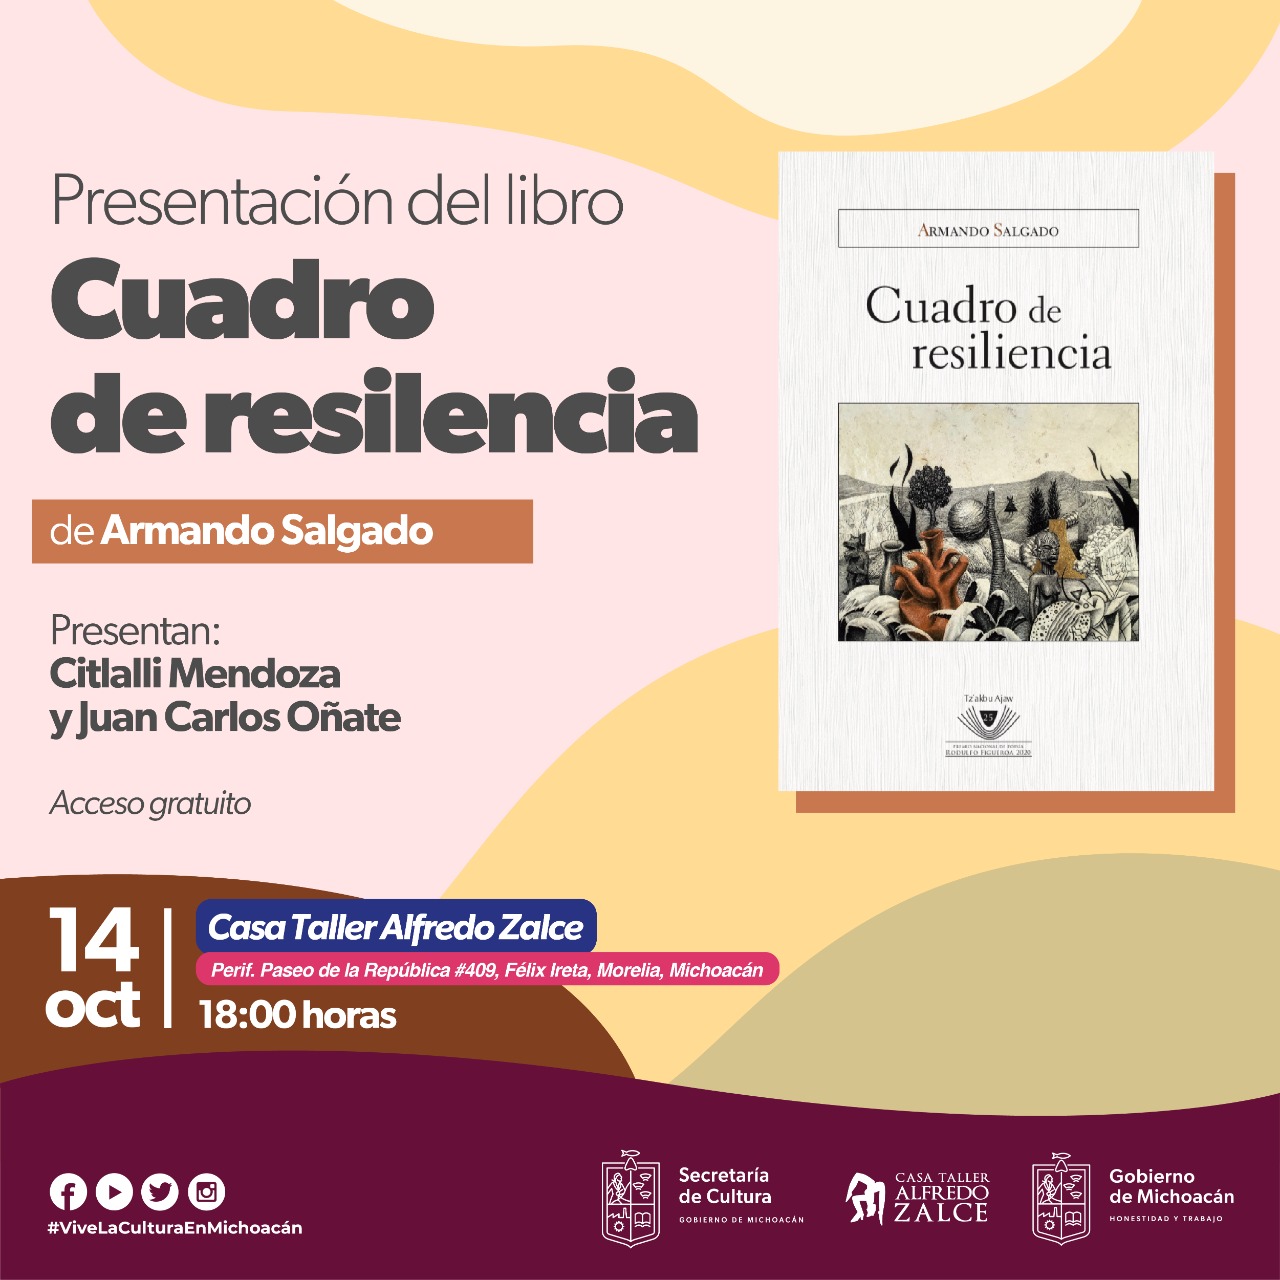 Presentarán el libro “Cuadro de resiliencia” en Casa Taller Alfredo Zalce